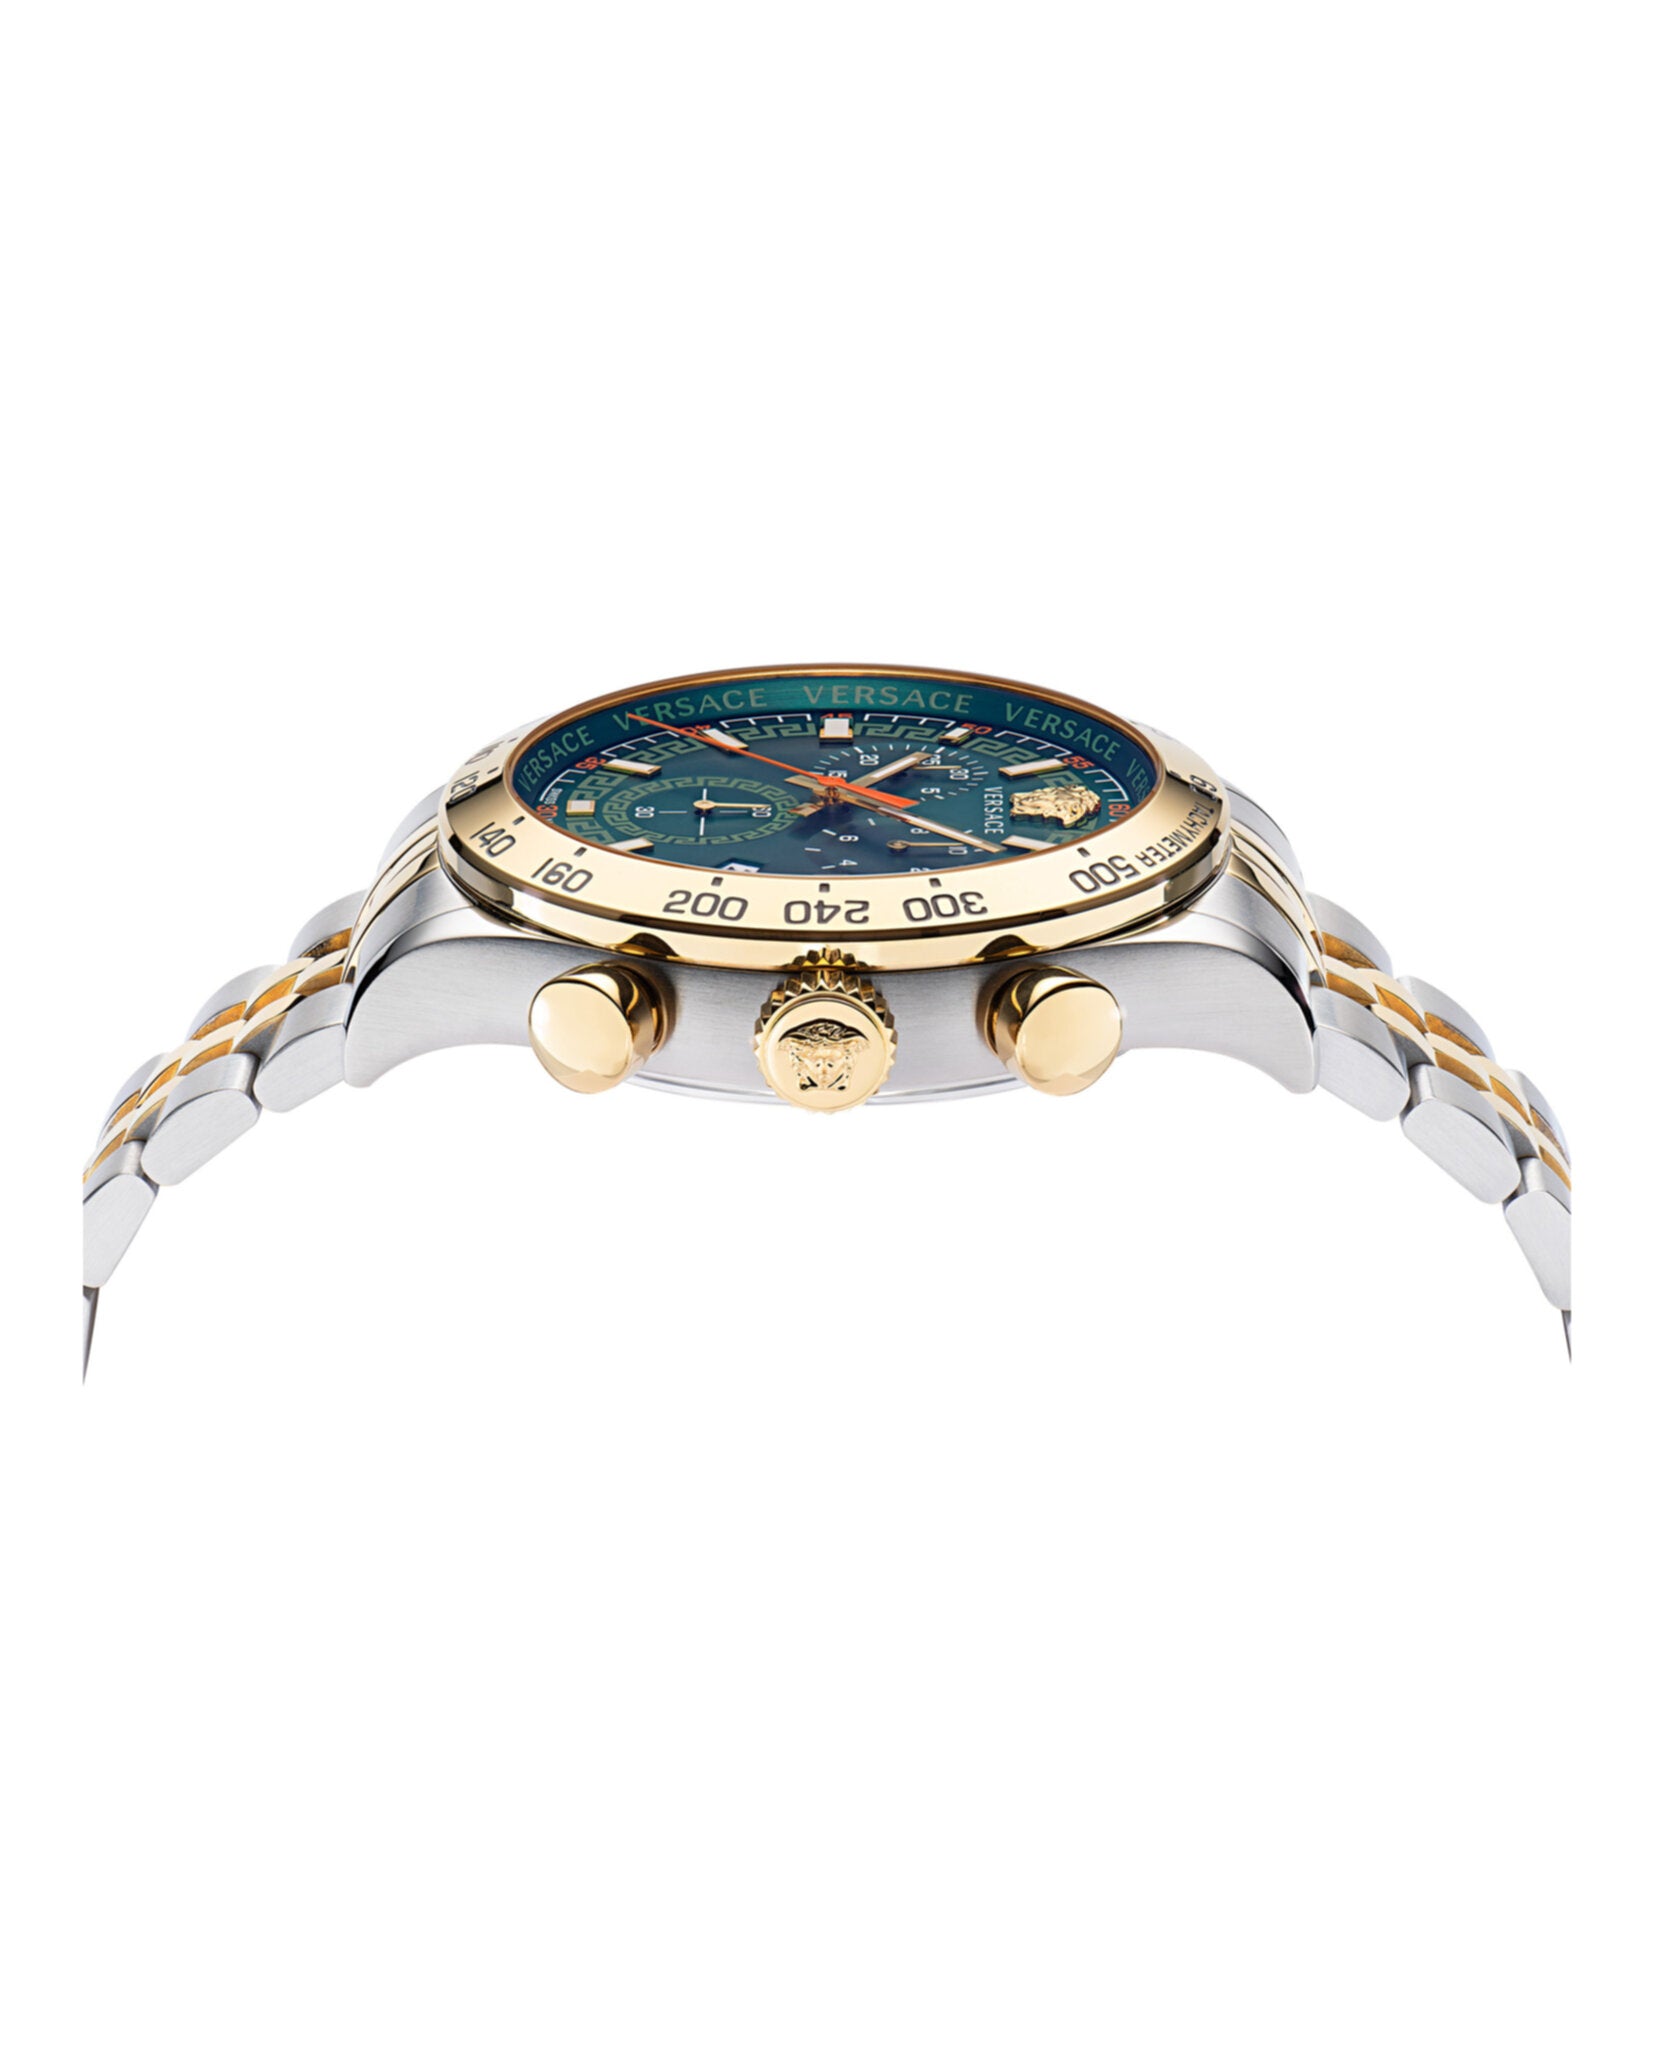 Hellenyium Chrono Bracelet Watch